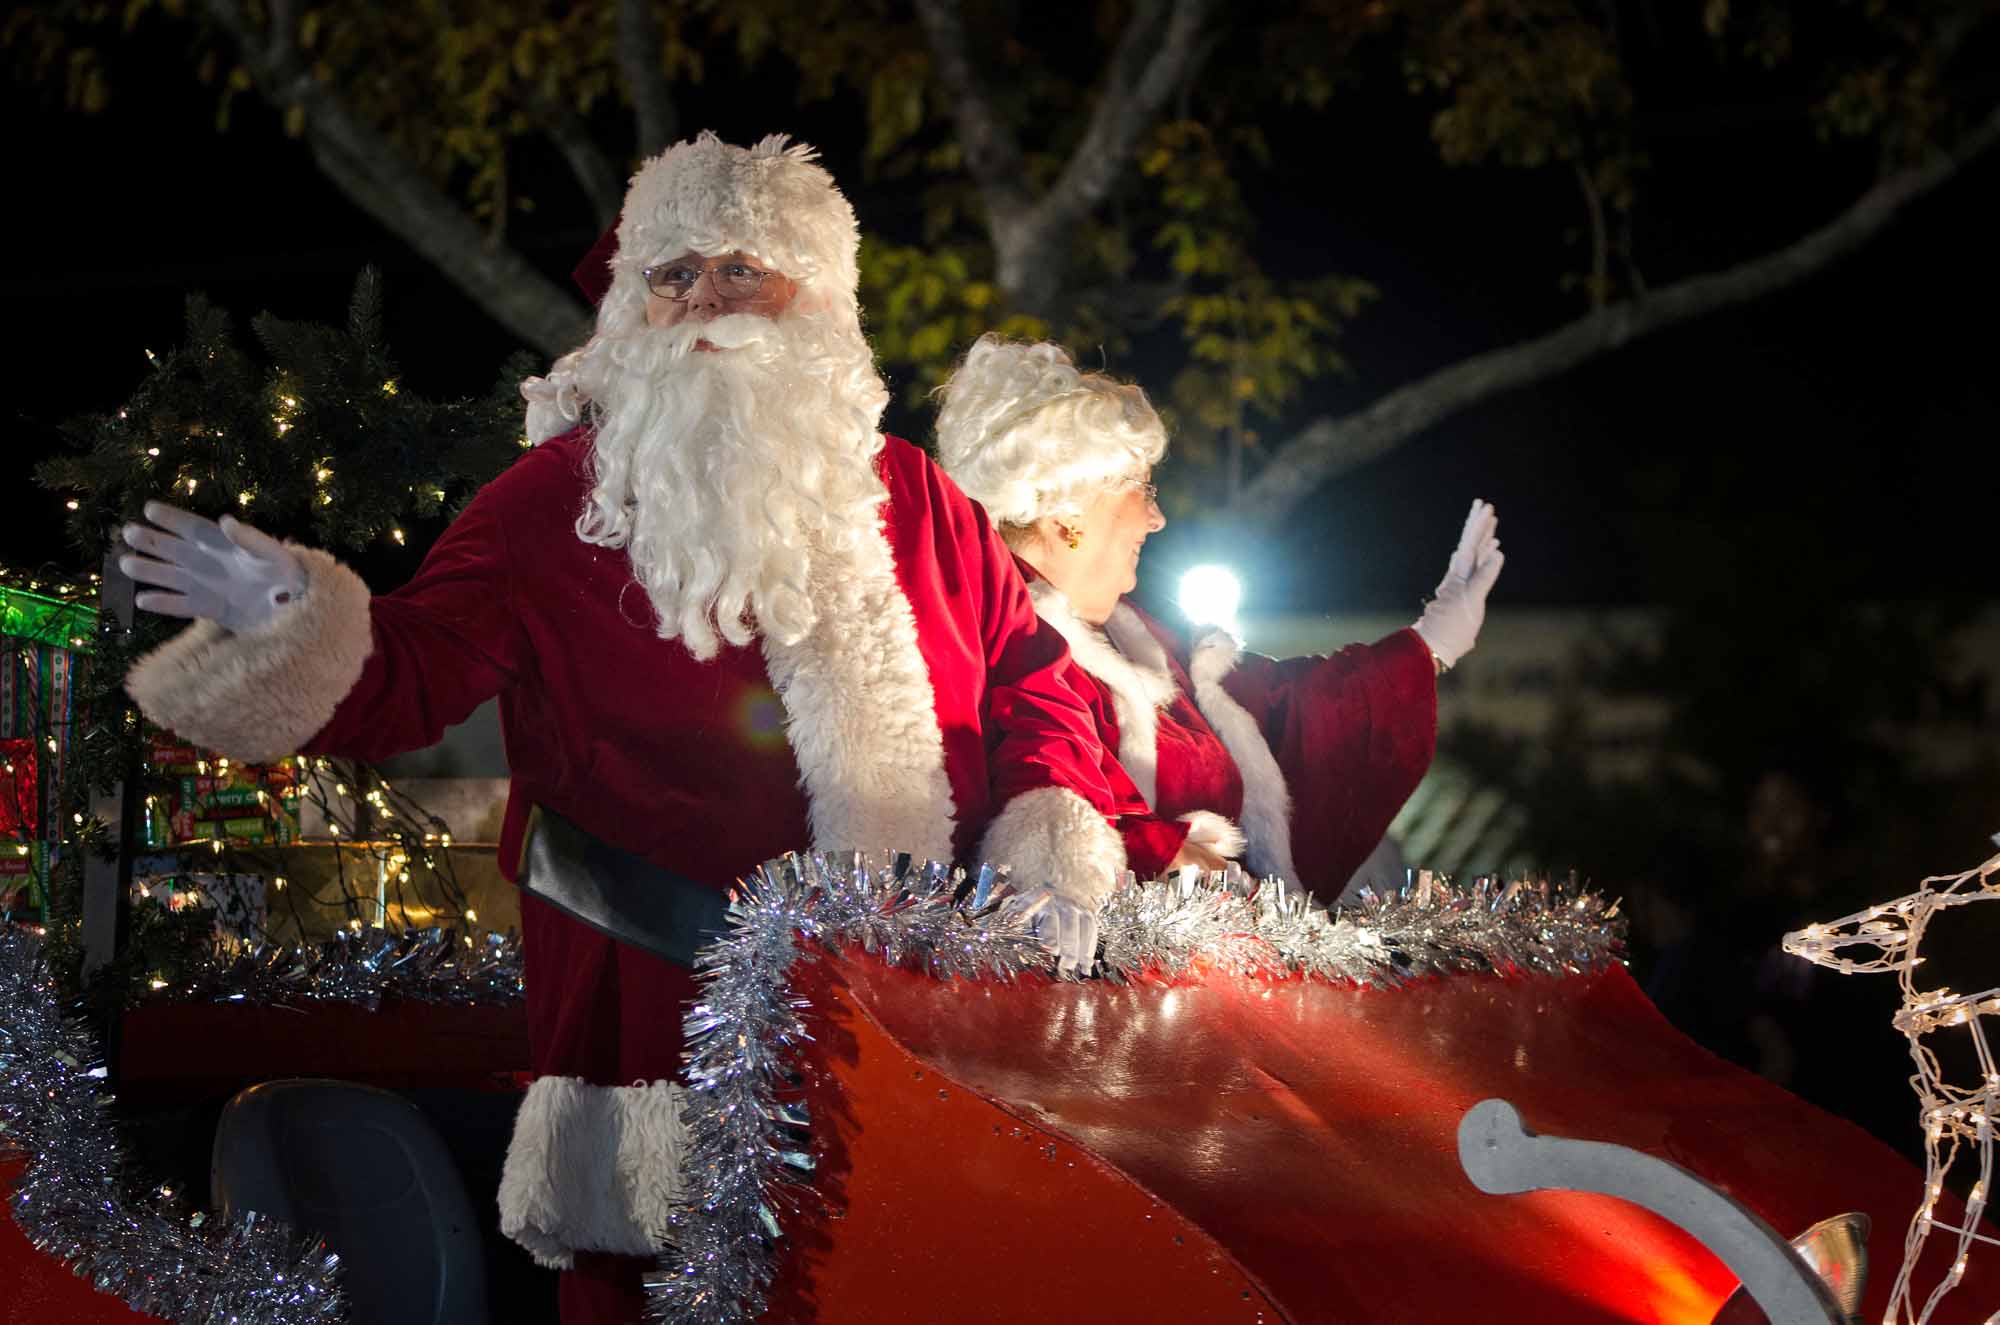 Santa Claus and Mrs Claus at last year's Holiday Parade. Photo courtesy City of Coral Springs.